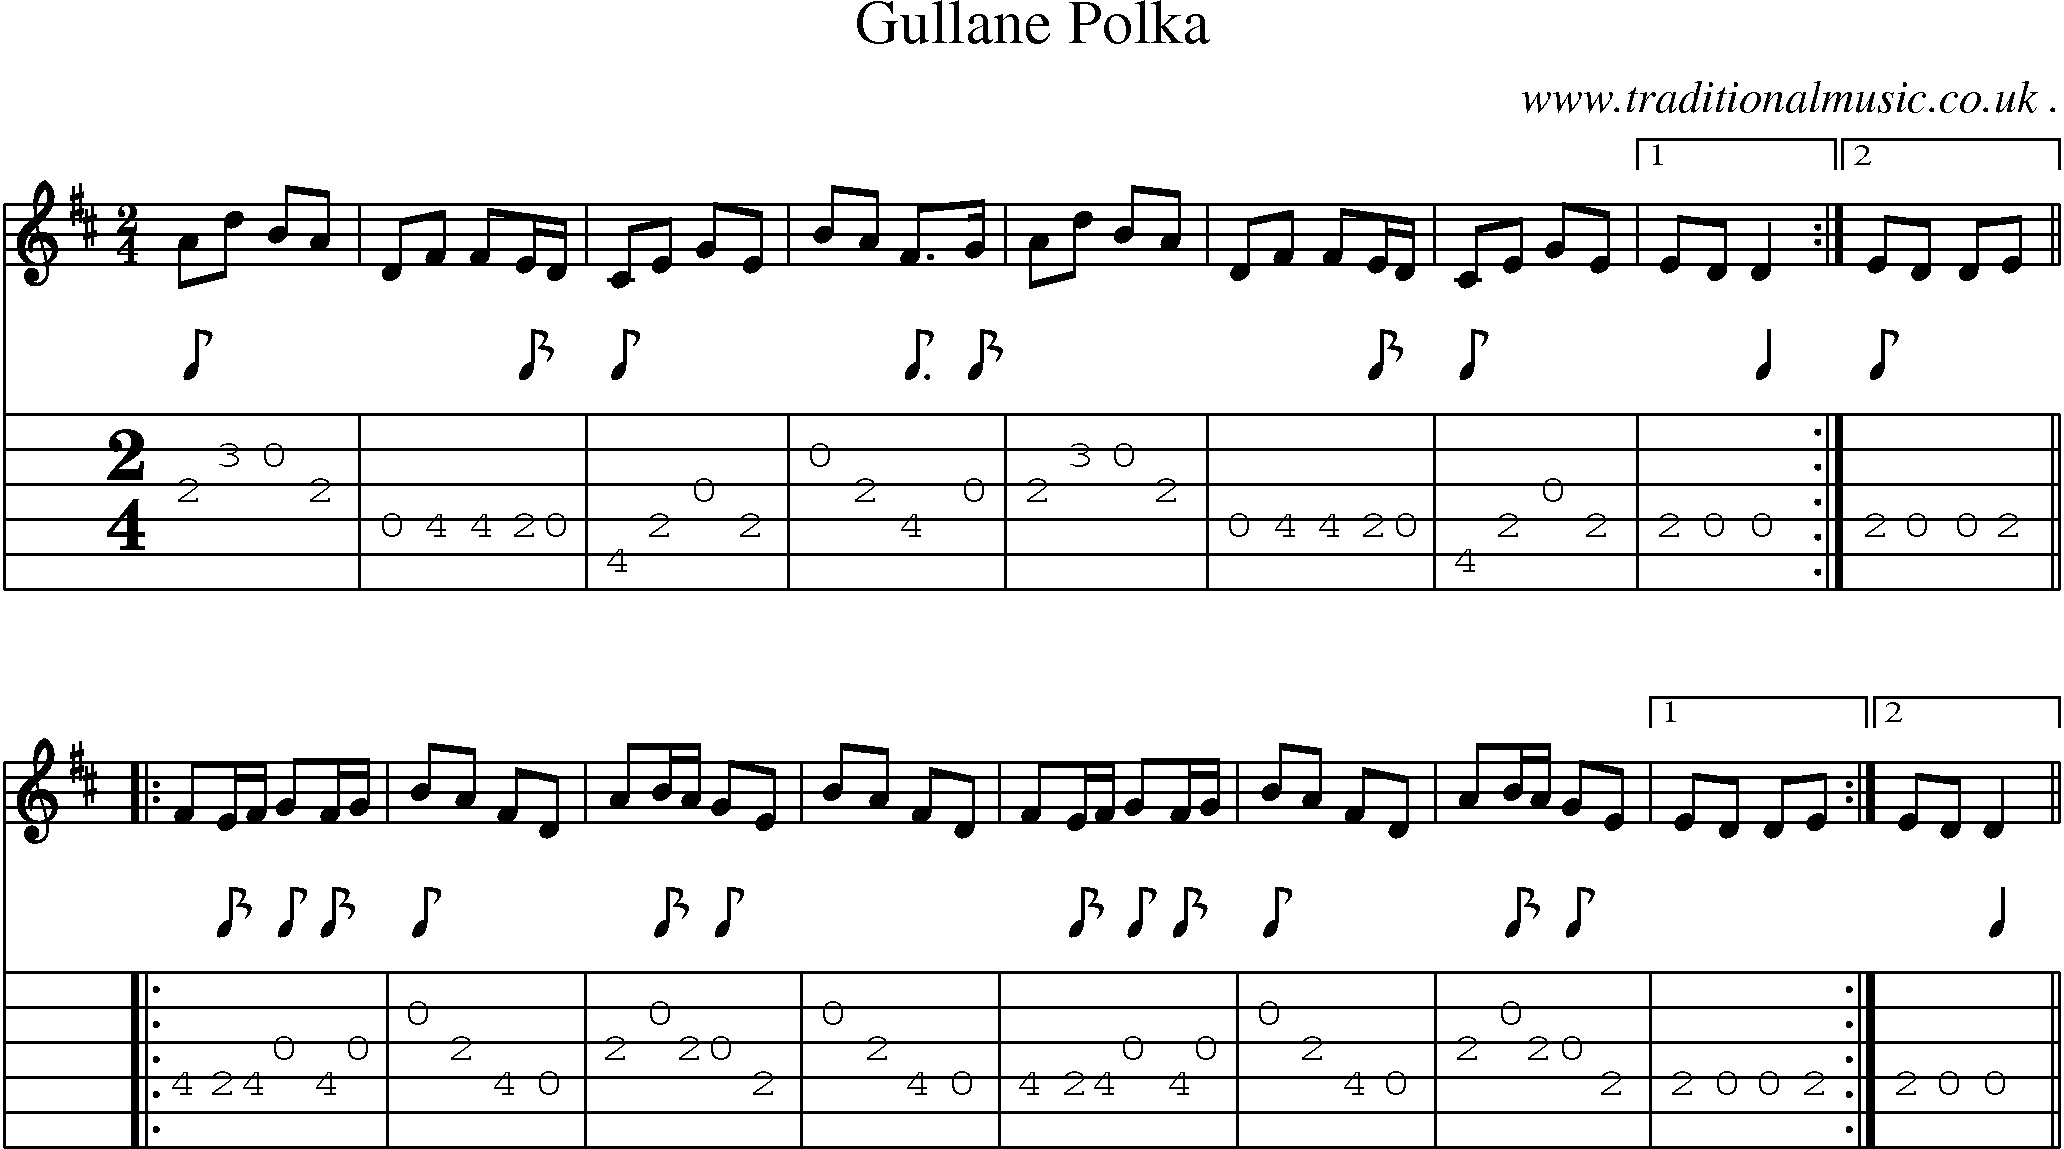 Sheet-Music and Guitar Tabs for Gullane Polka